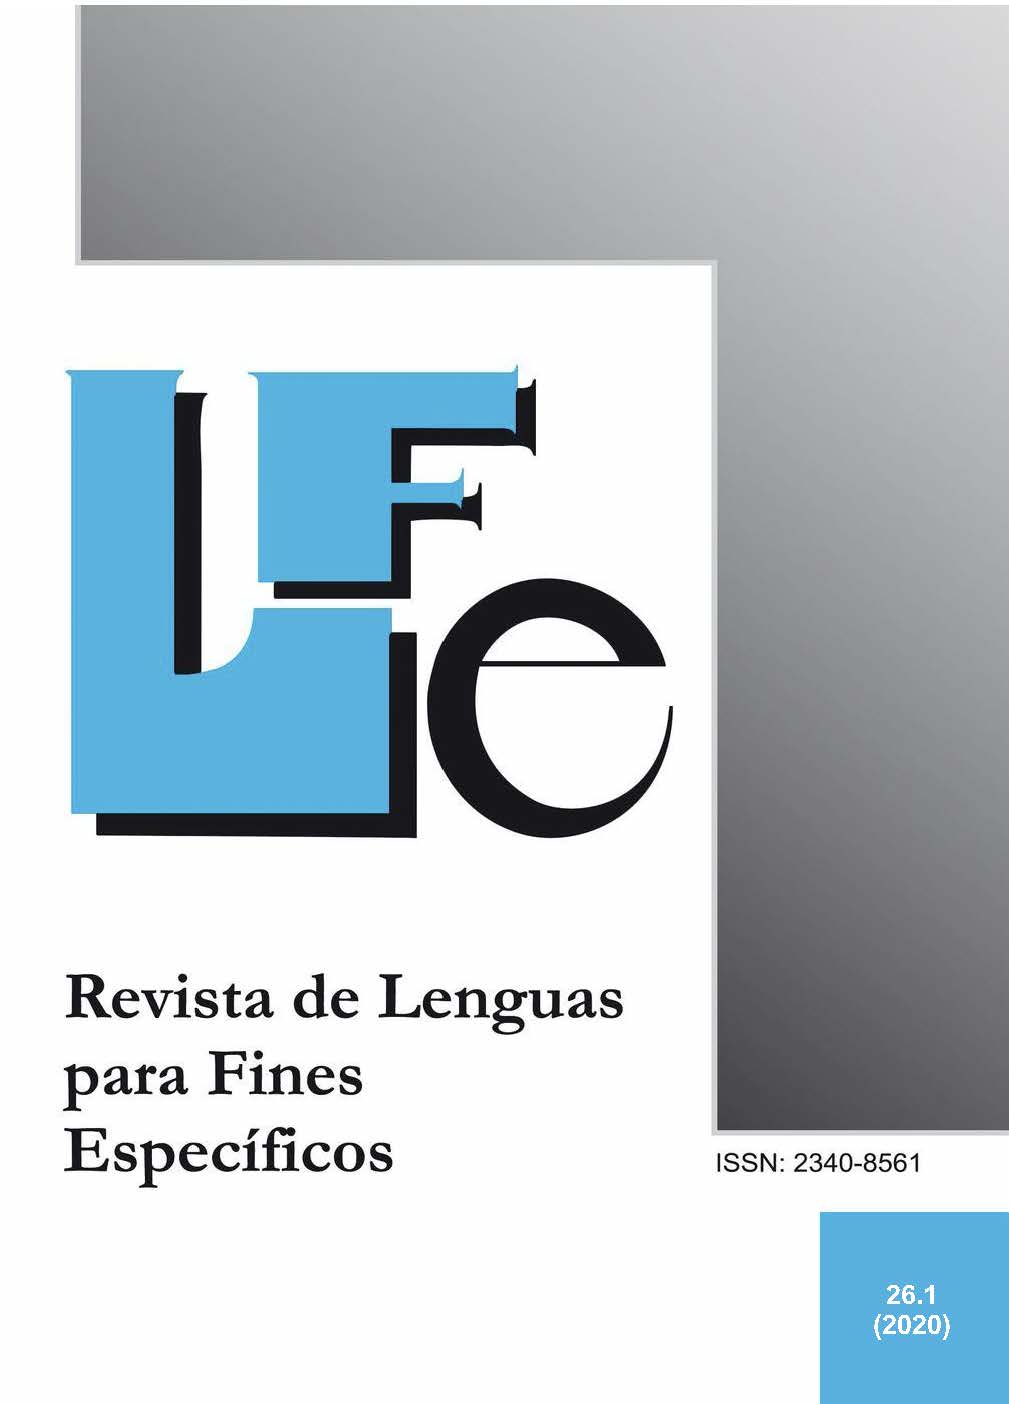 					Ver Vol. 26 Núm. 1 (2020): Revista de lenguas para fines específicos
				